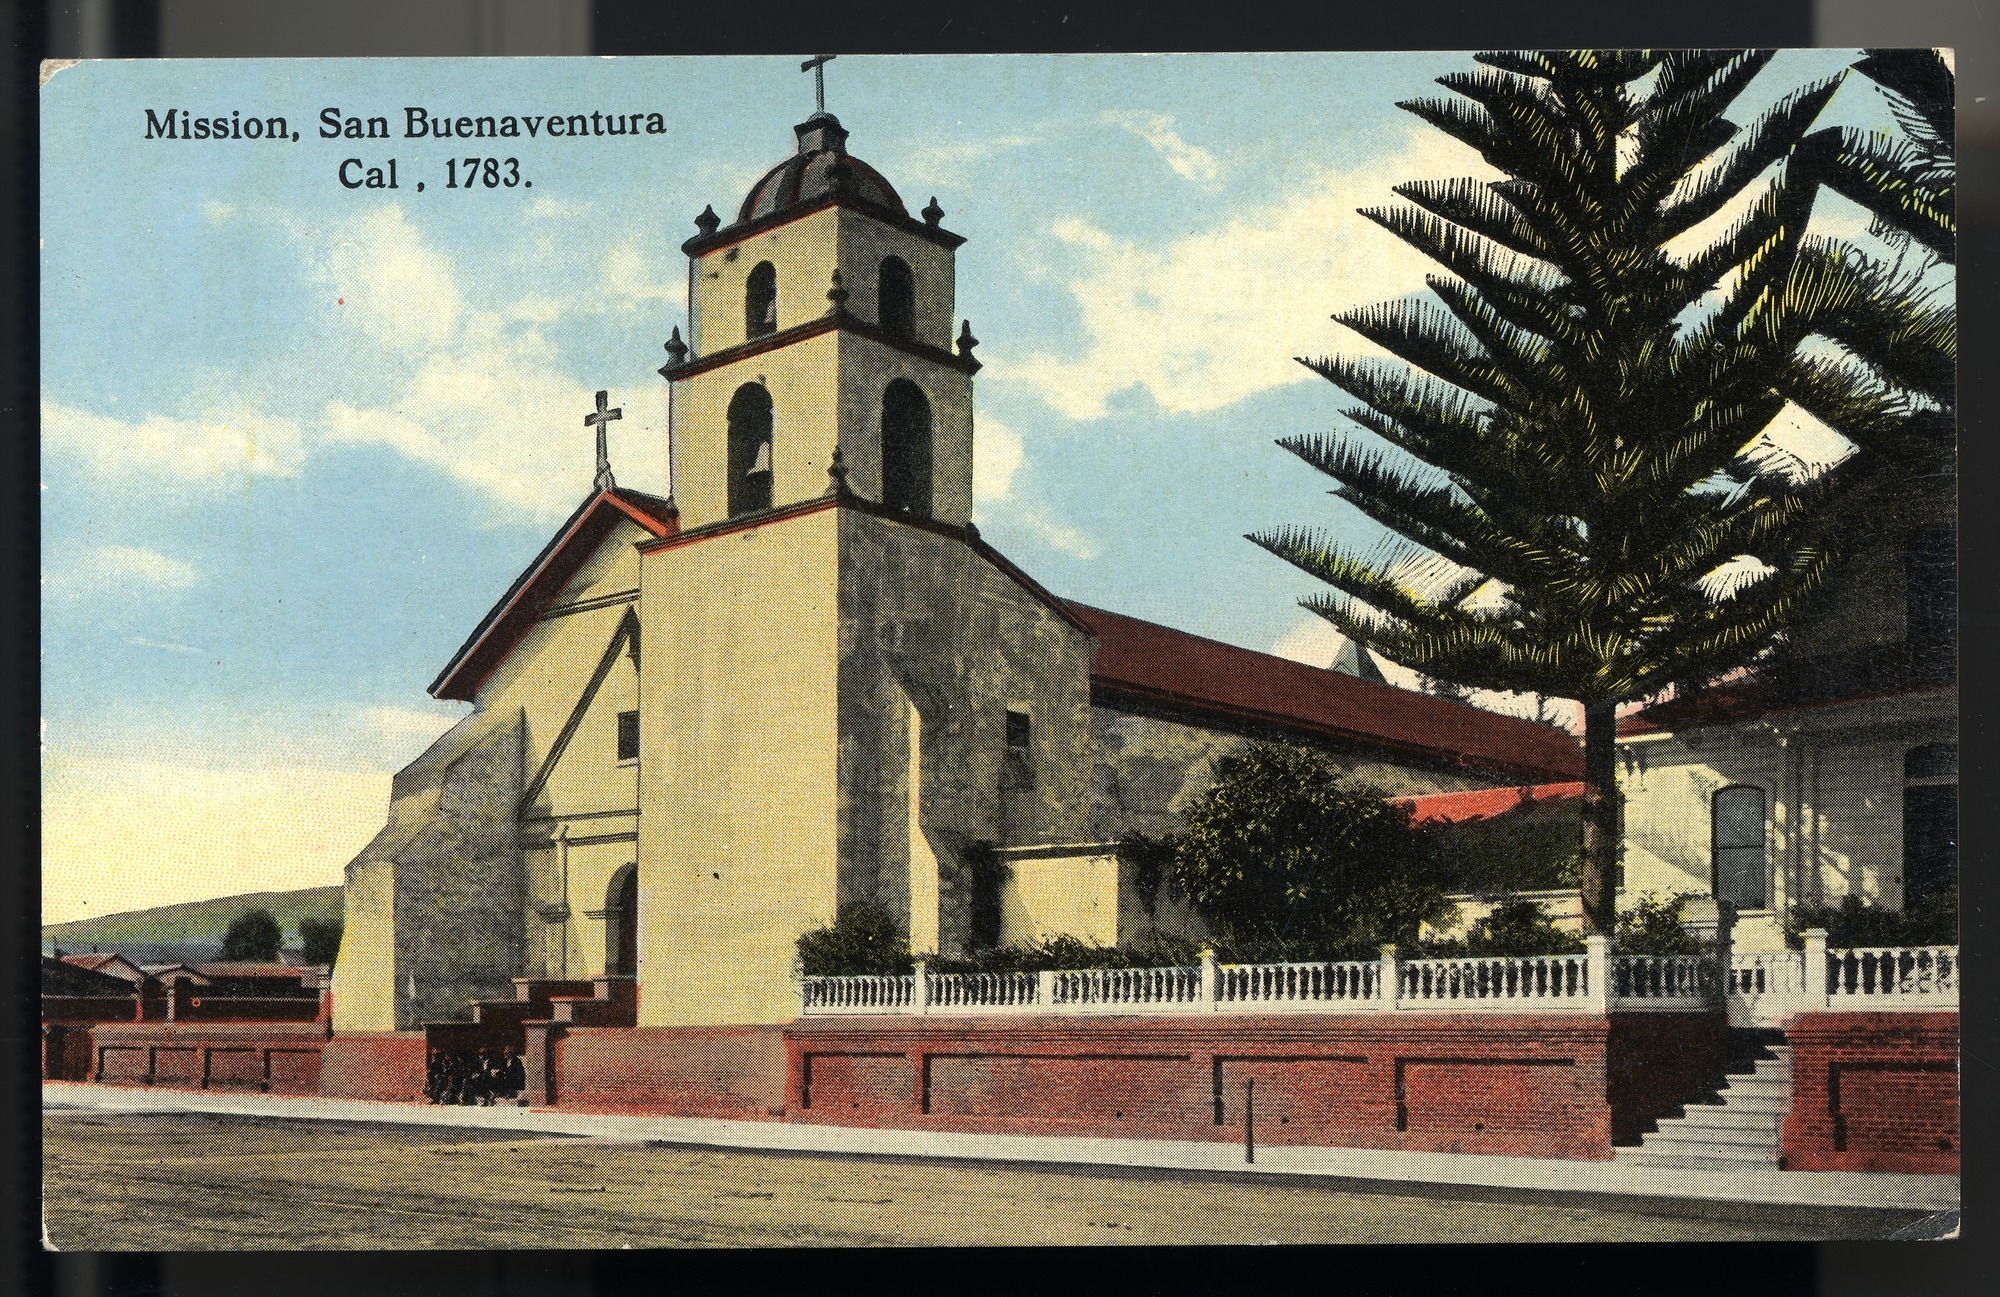 Postcard 31 – Mission, San Buenaventura, Cal, 1783. I. L. Eno Company. Curt Teich Company. ca 1908. NMAH 1986.0639.0349.